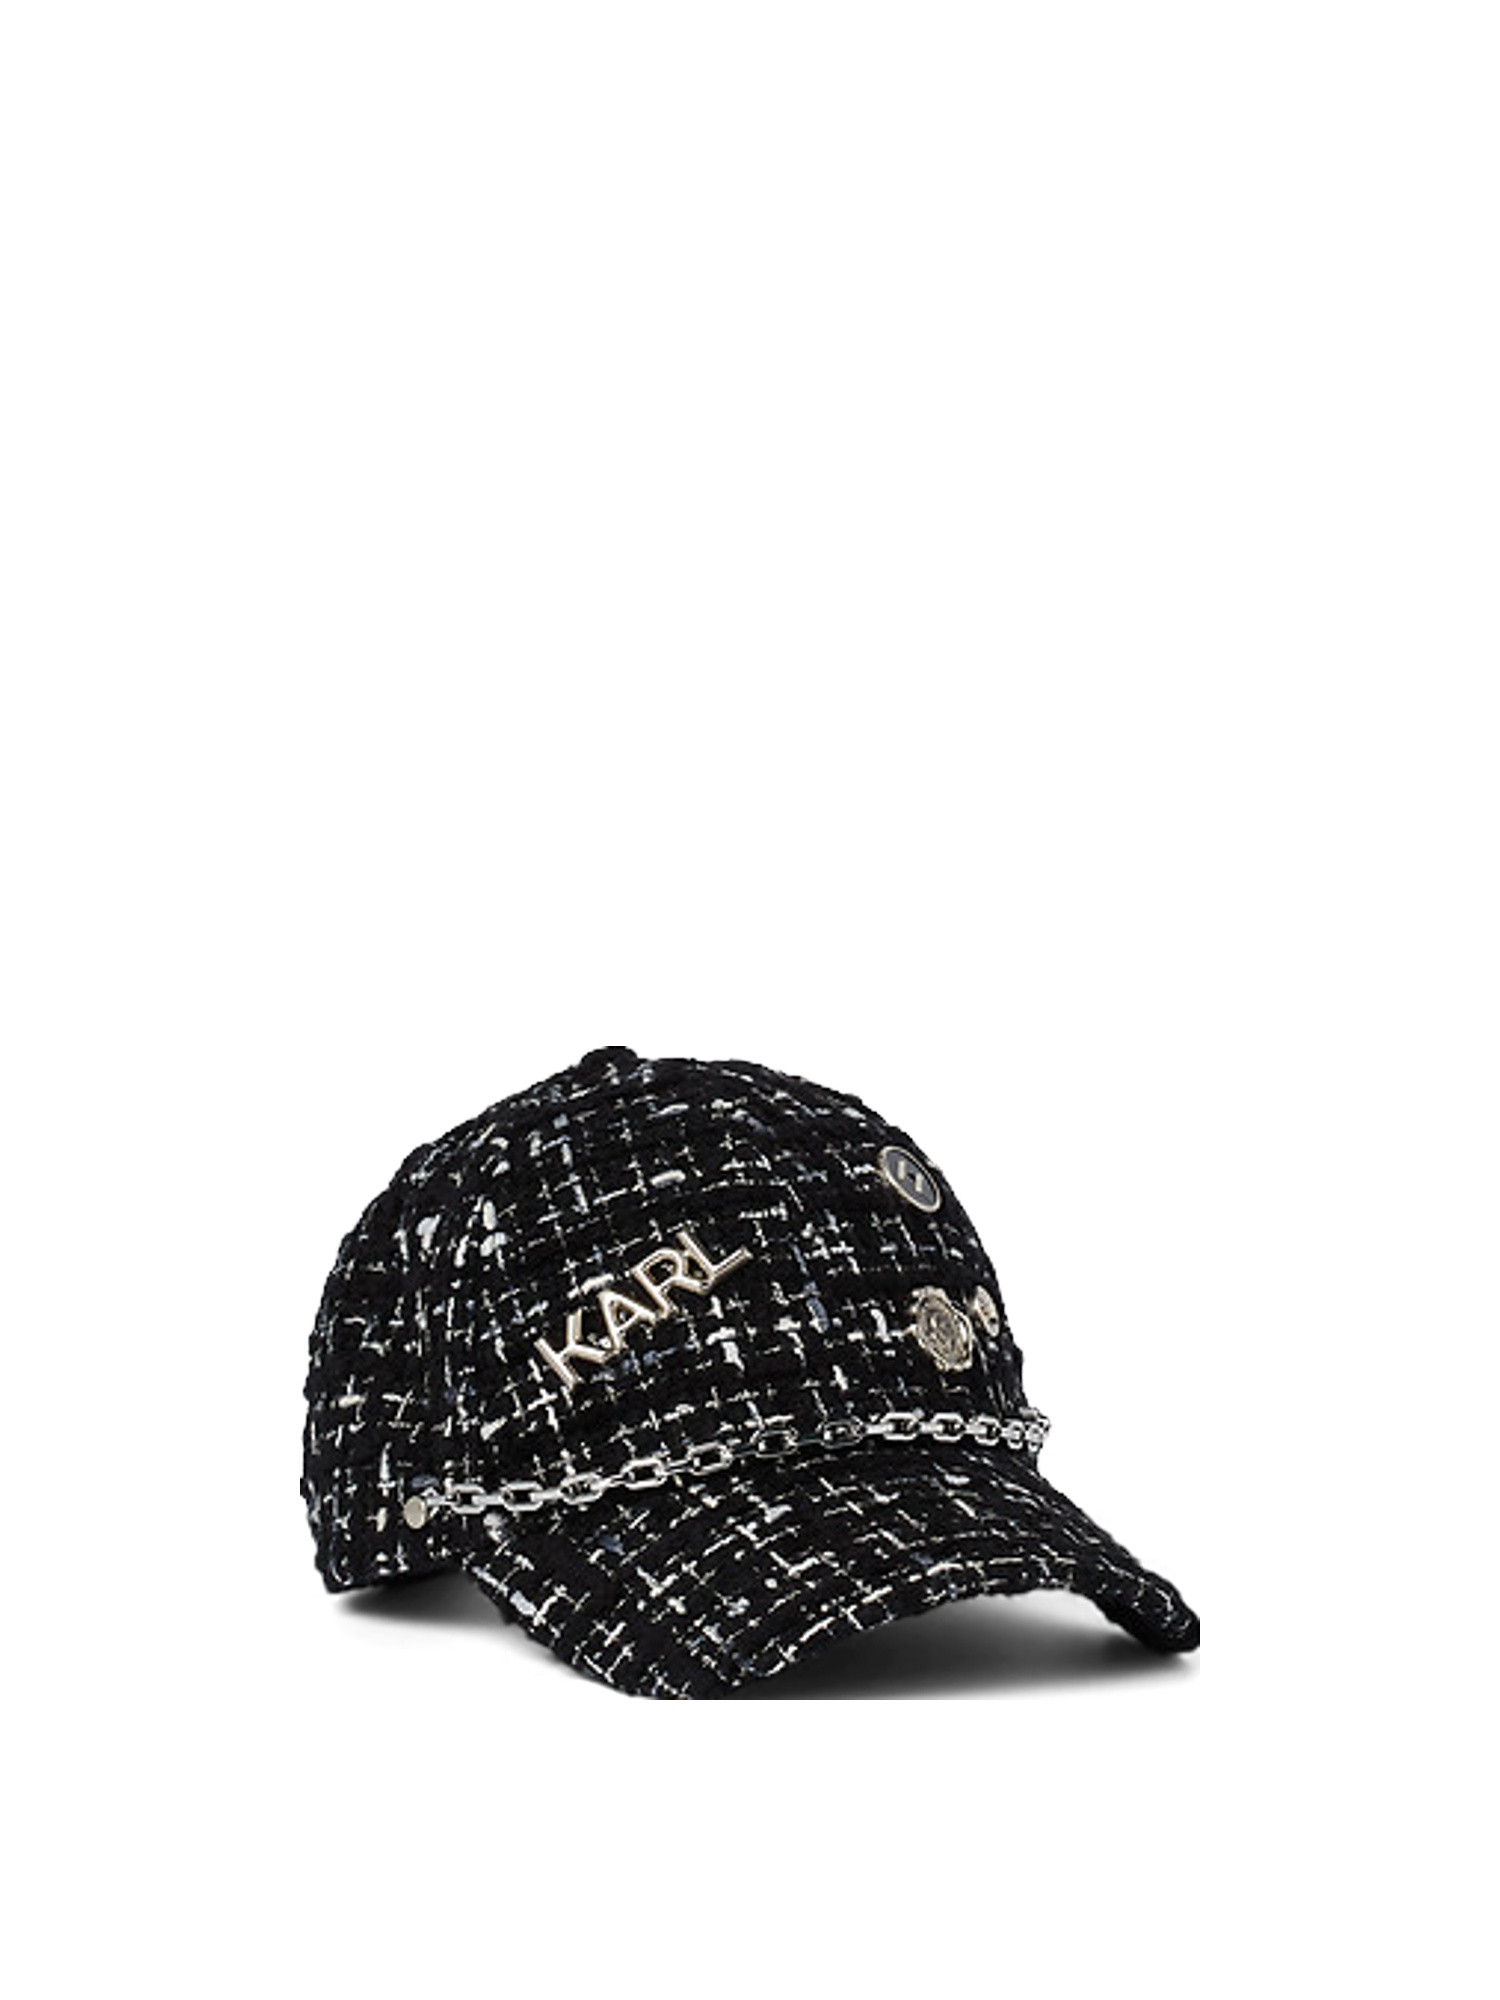 Karl Lagerfeld - K/pins cappello bouclé, Black, large image number 0